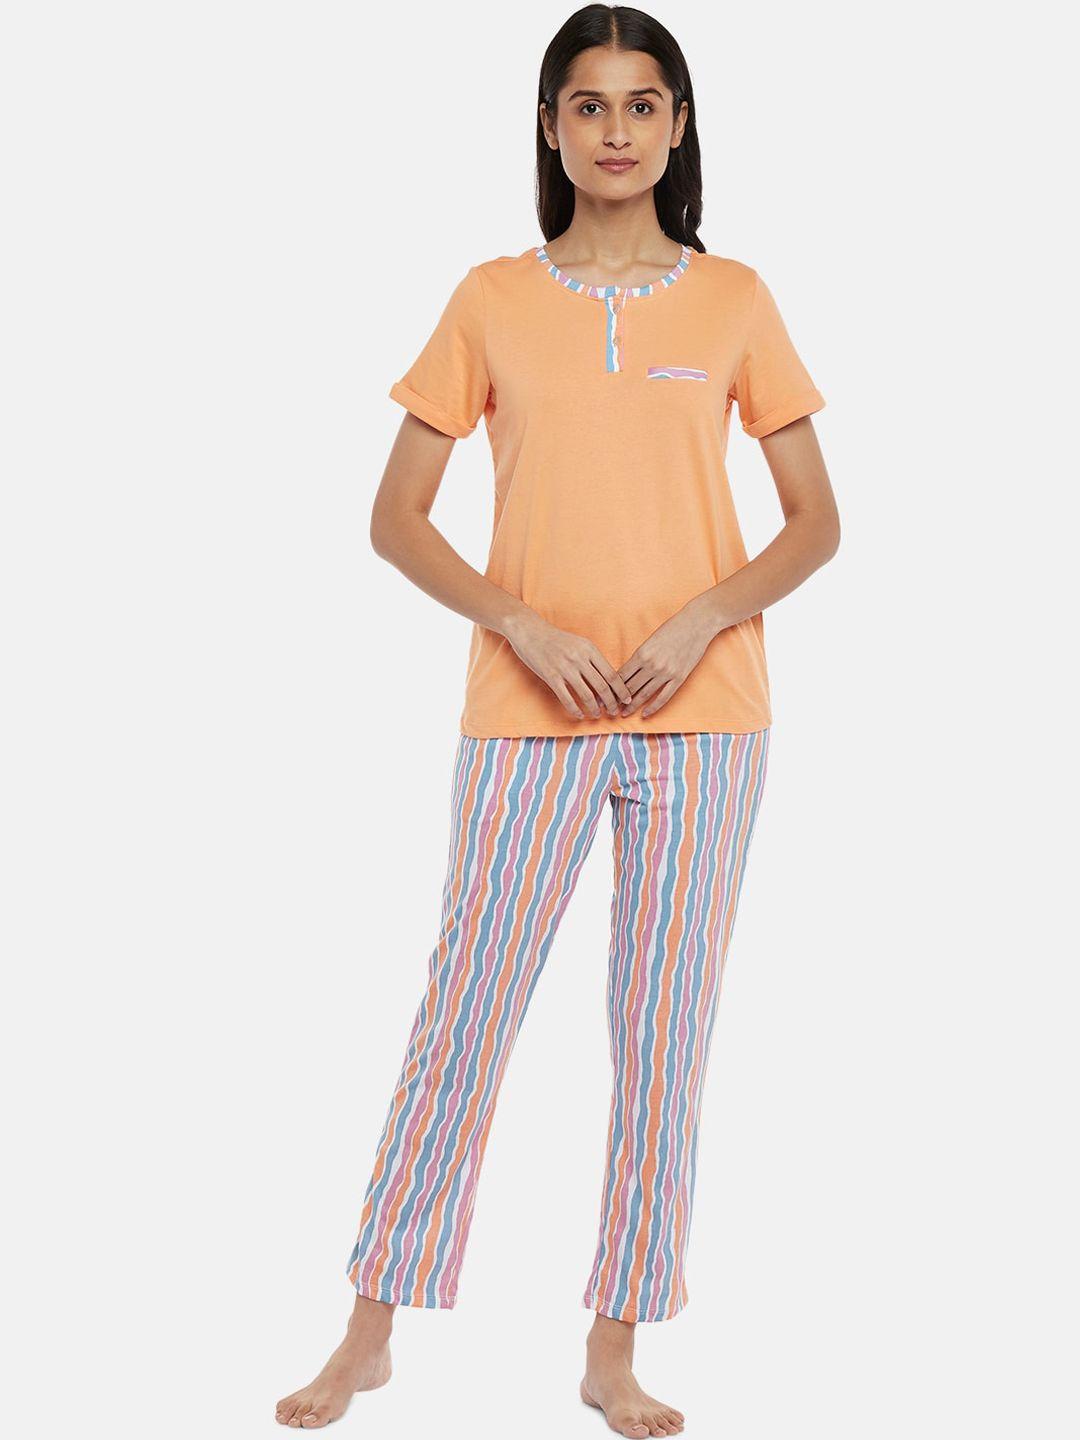 dreamz-by-pantaloons-women-orange-&-blue-night-suit